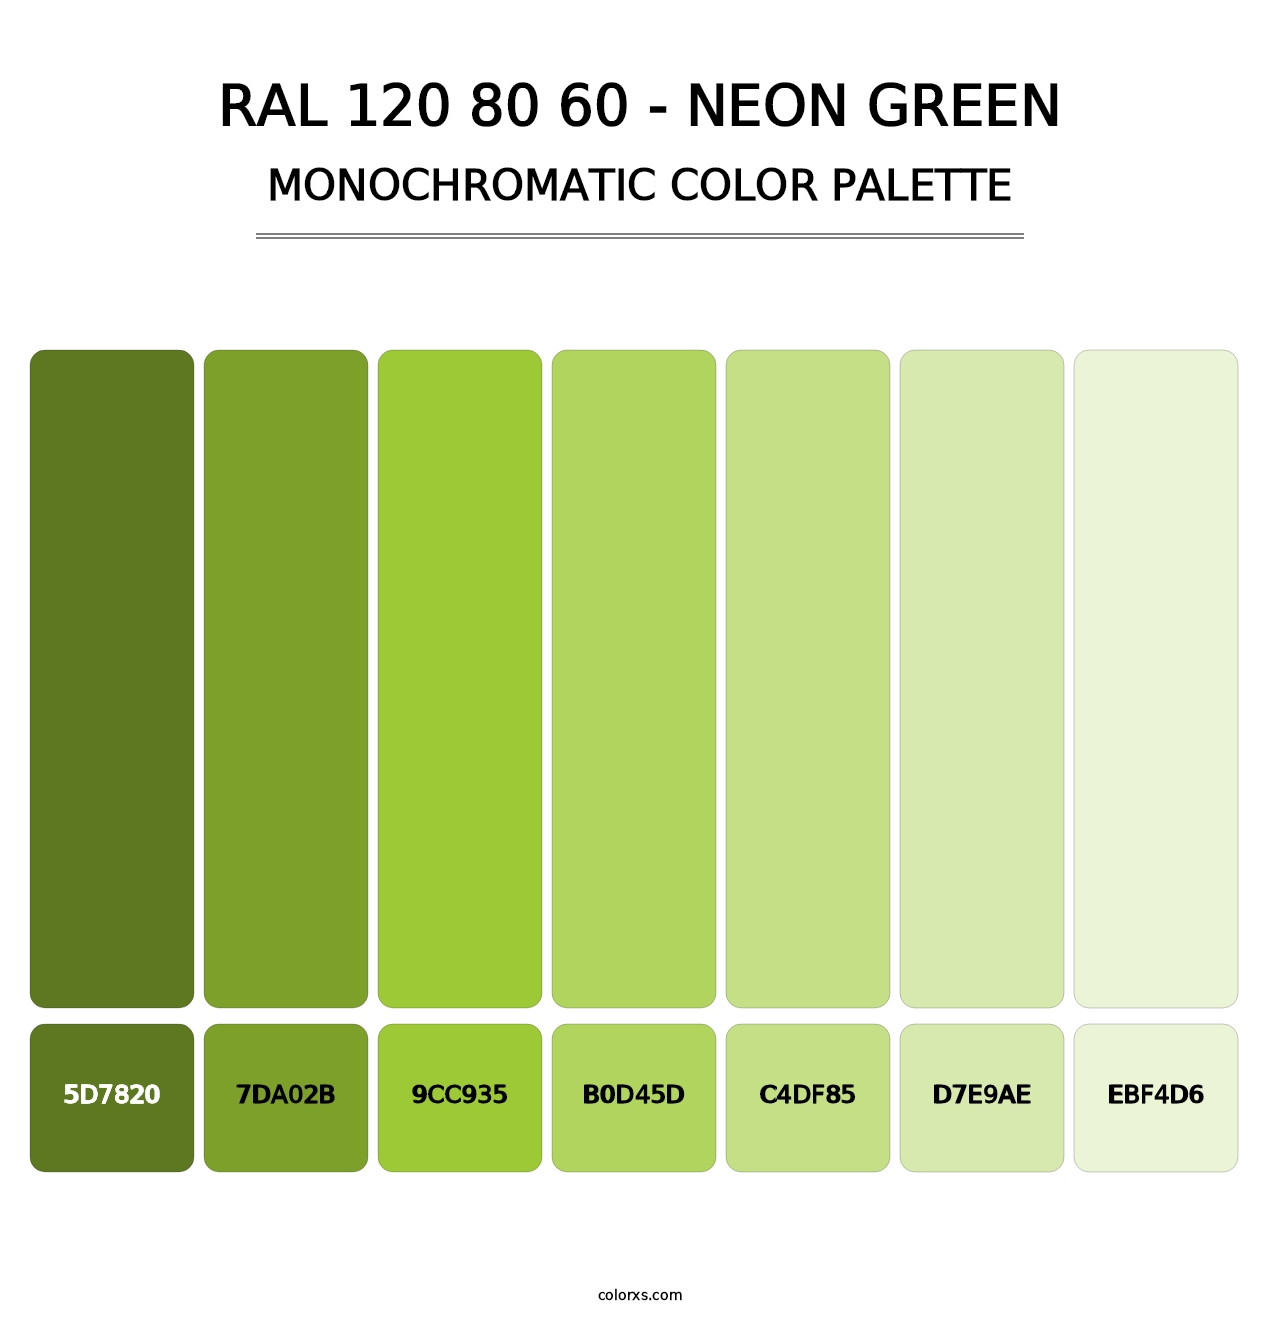 RAL 120 80 60 - Neon Green - Monochromatic Color Palette